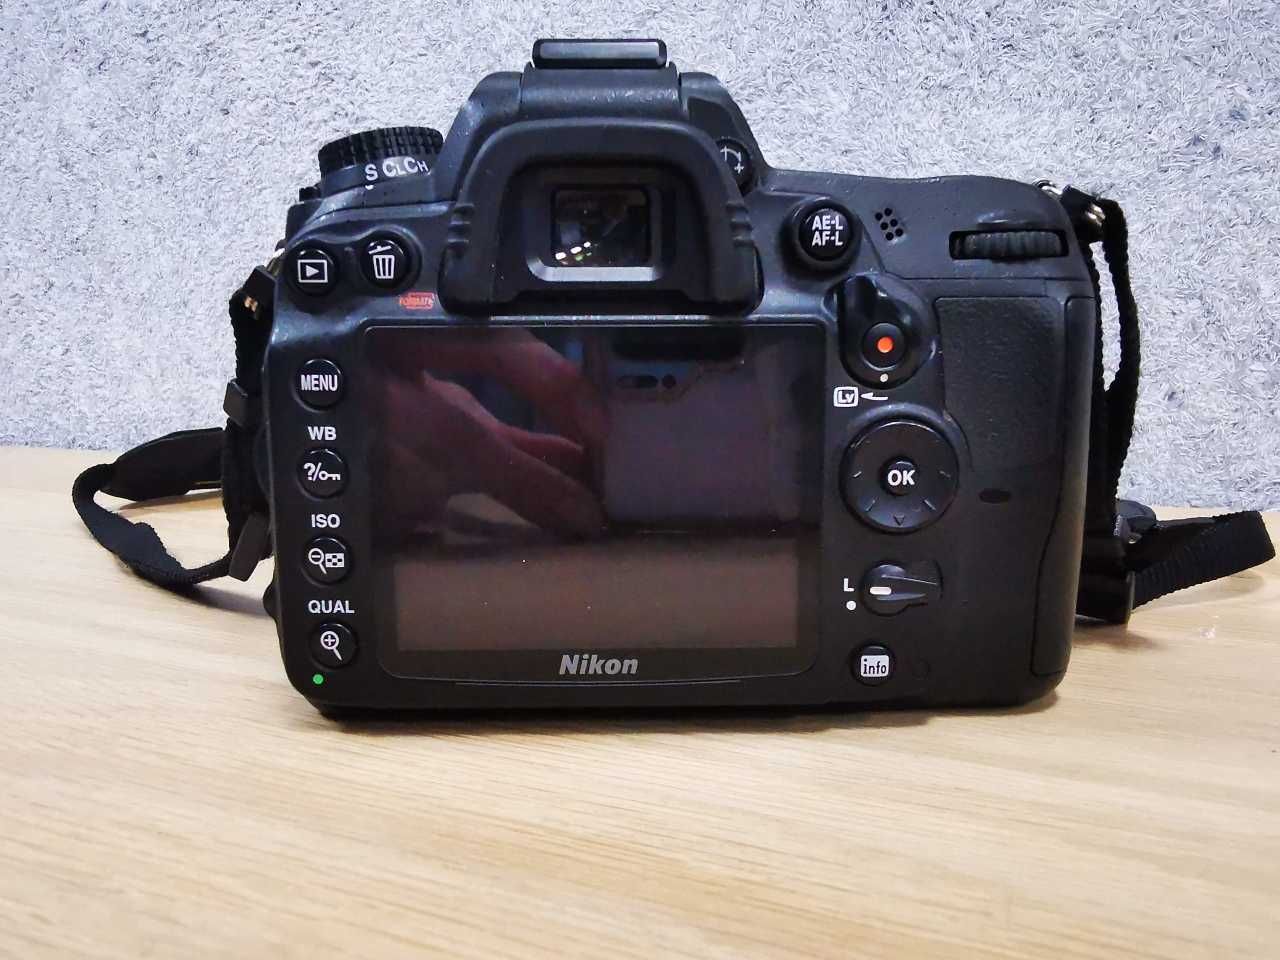 Aparat Nikon D7000